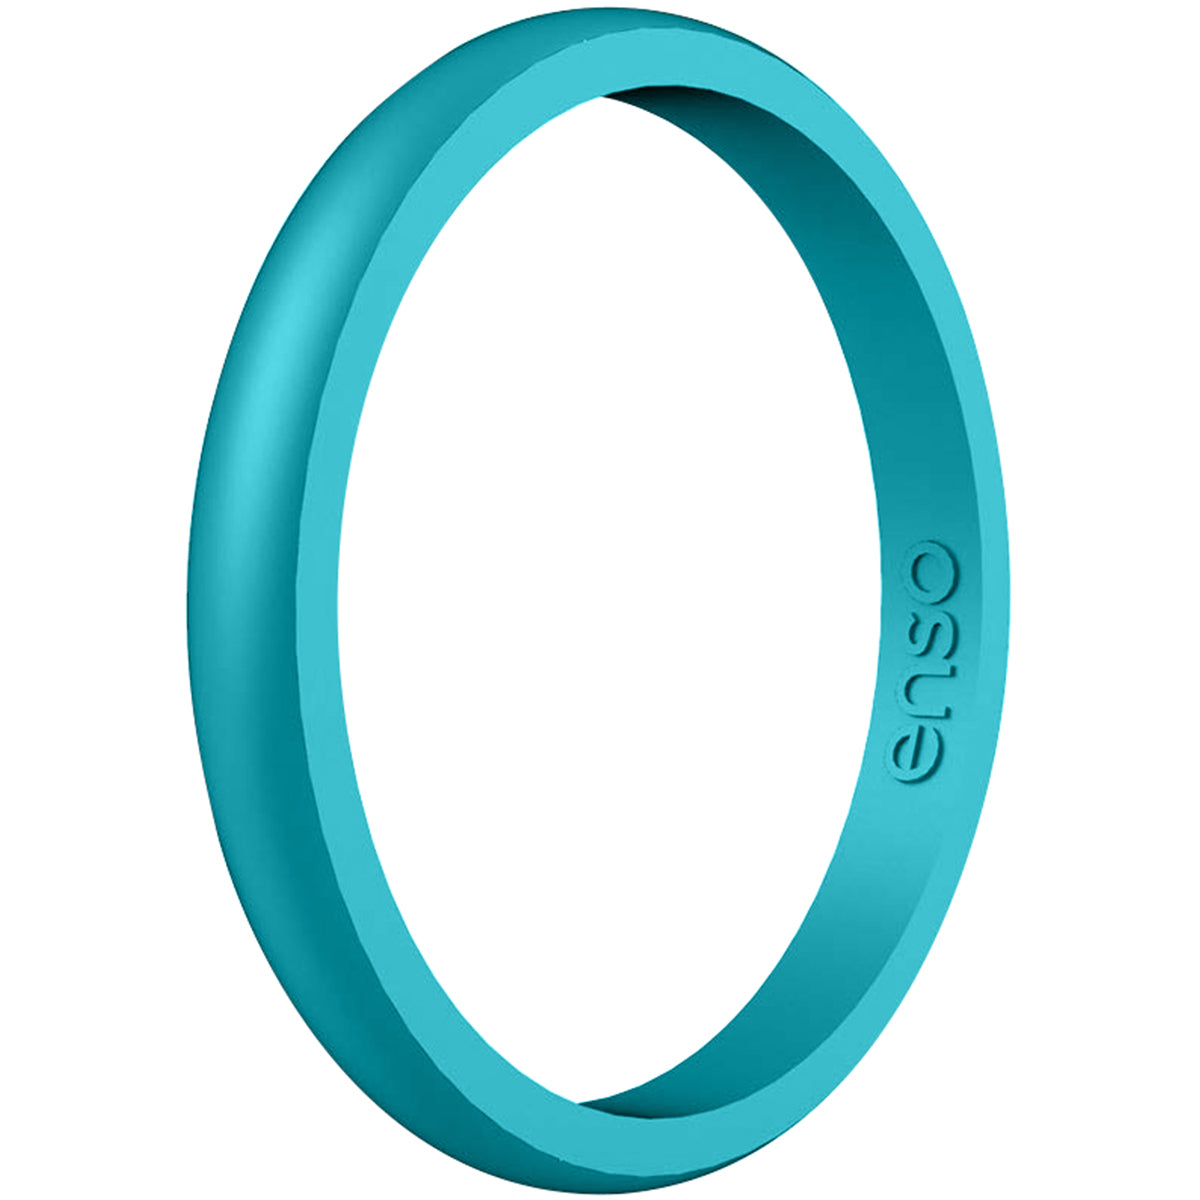 Enso Rings Halo Elements Series Silicone Ring - Peacock Quartz Enso Rings